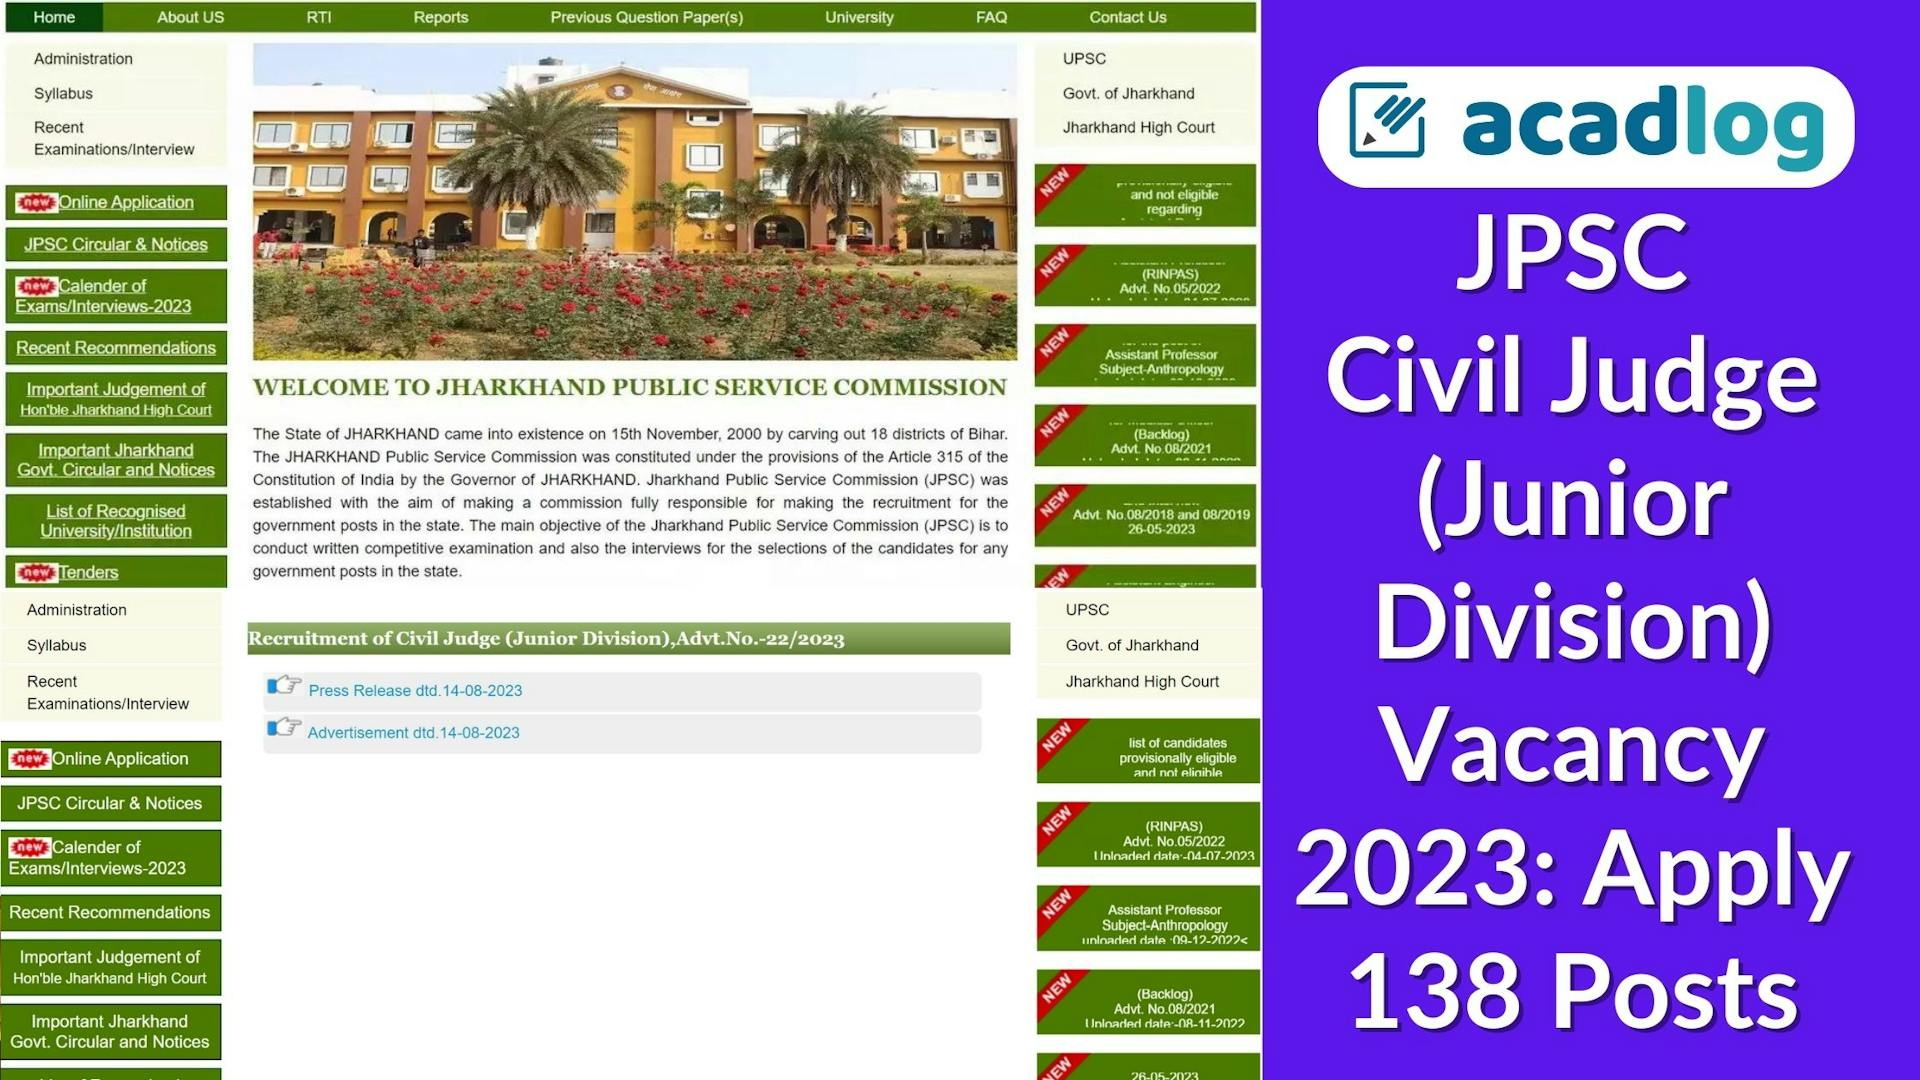 JPSC Civil Judge (Junior Division) Vacancy 2023: Apply 138 Posts